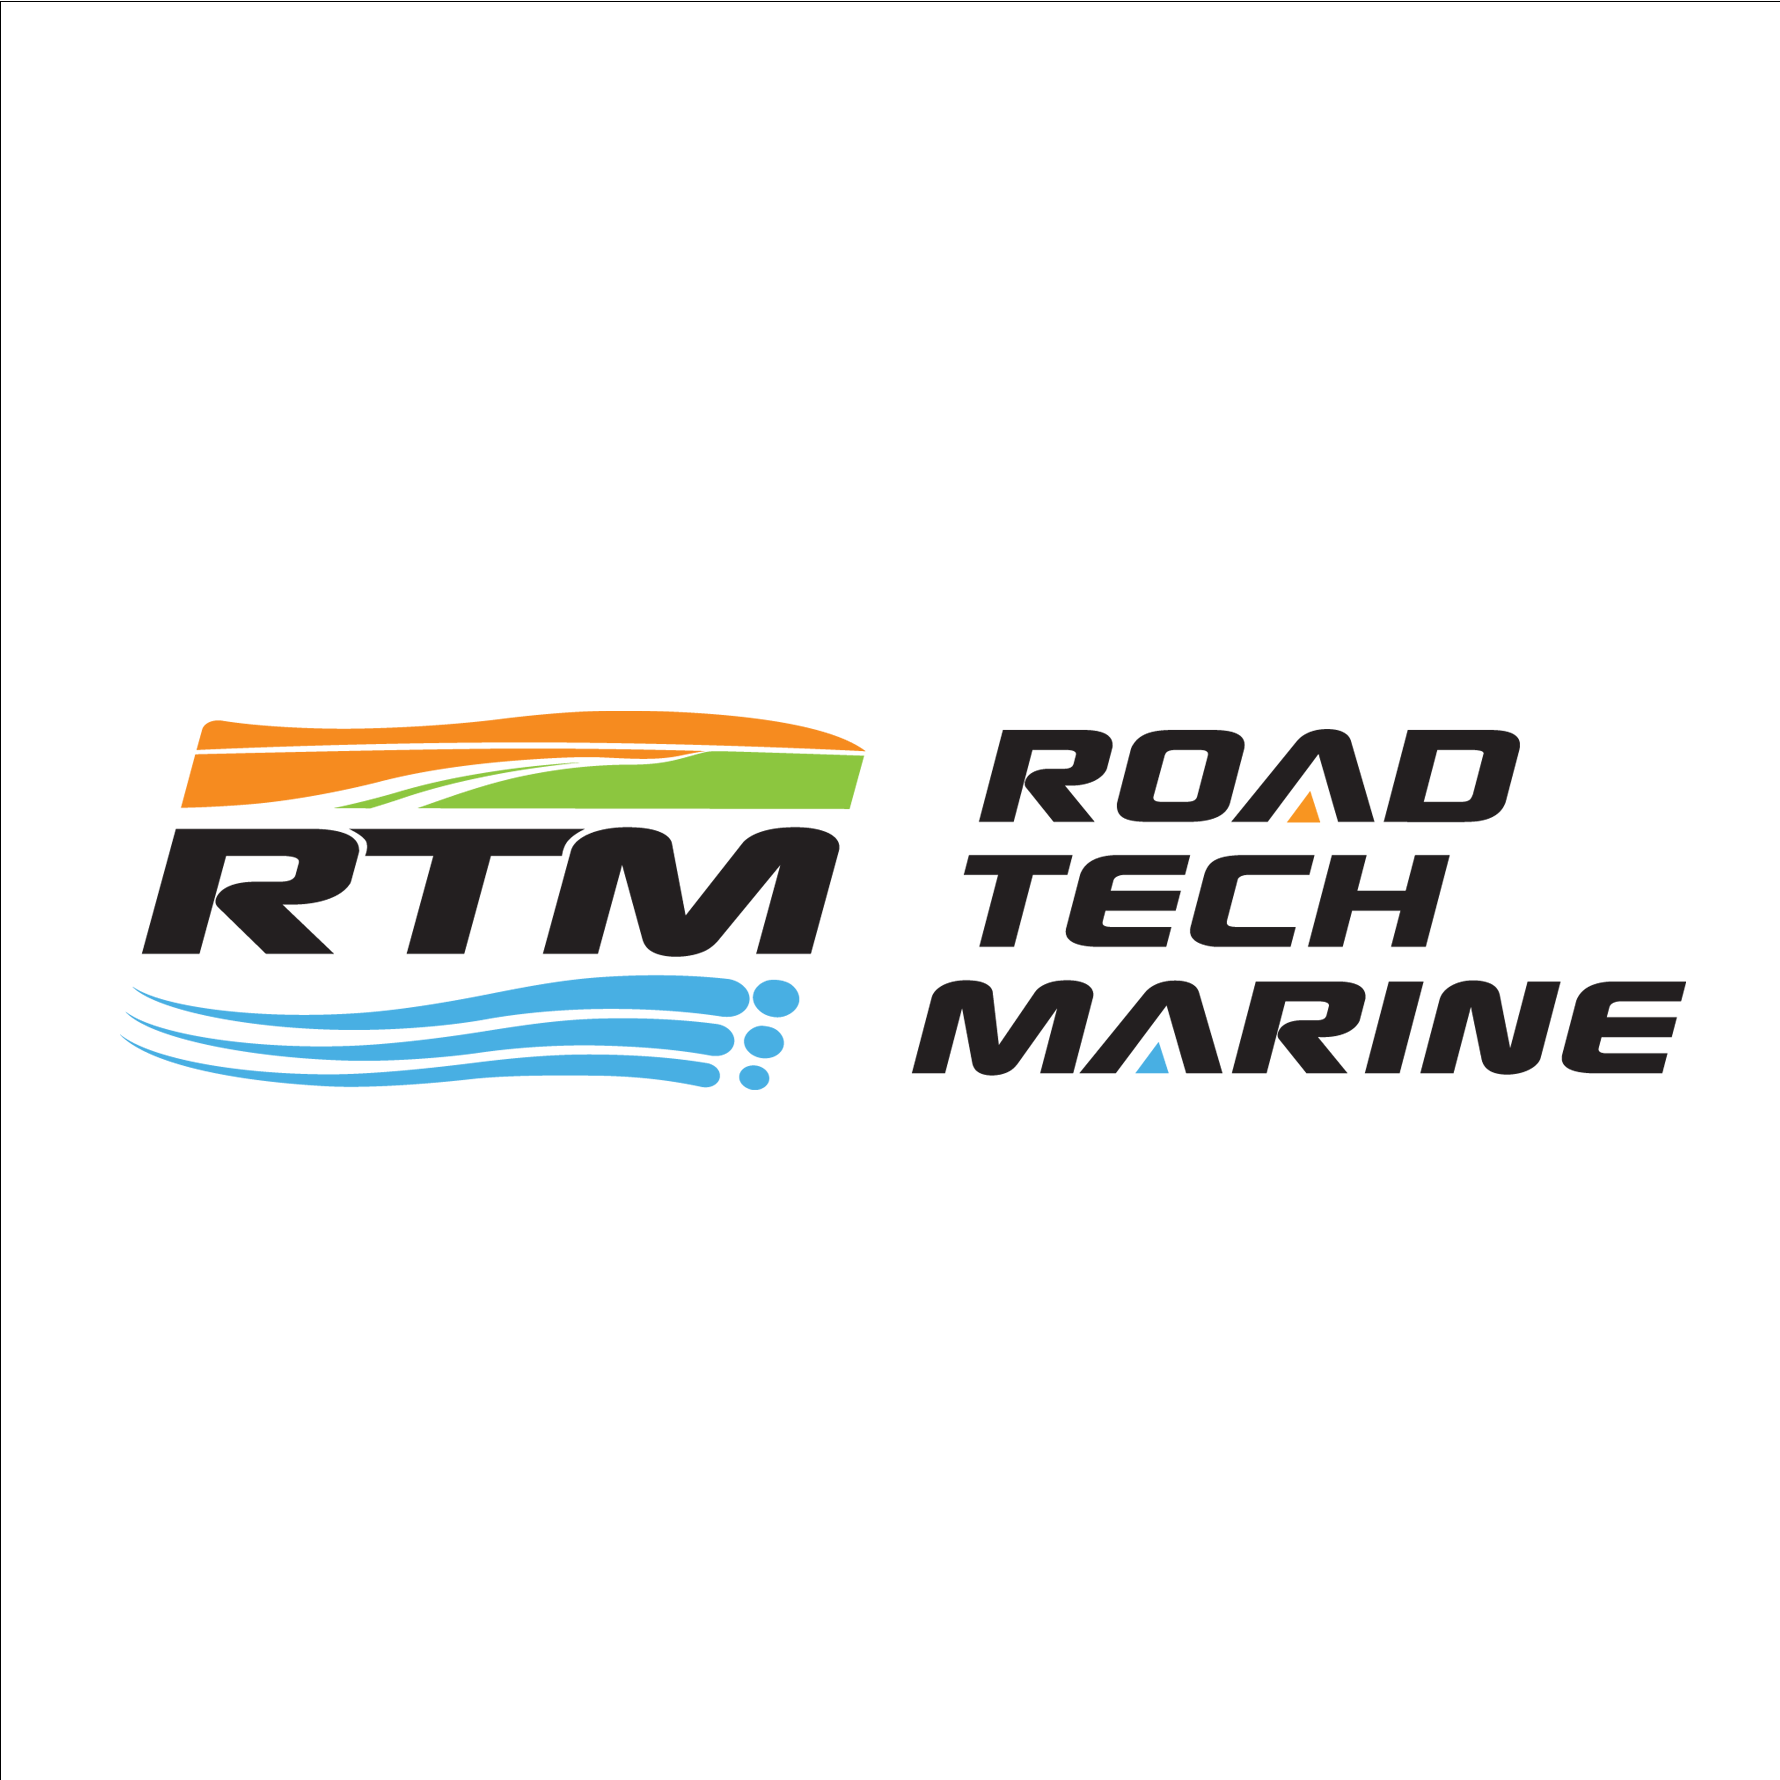 RTM - Road Tech Marine Bundaberg - Kensington, QLD 4670 - (07) 4152 6866 | ShowMeLocal.com